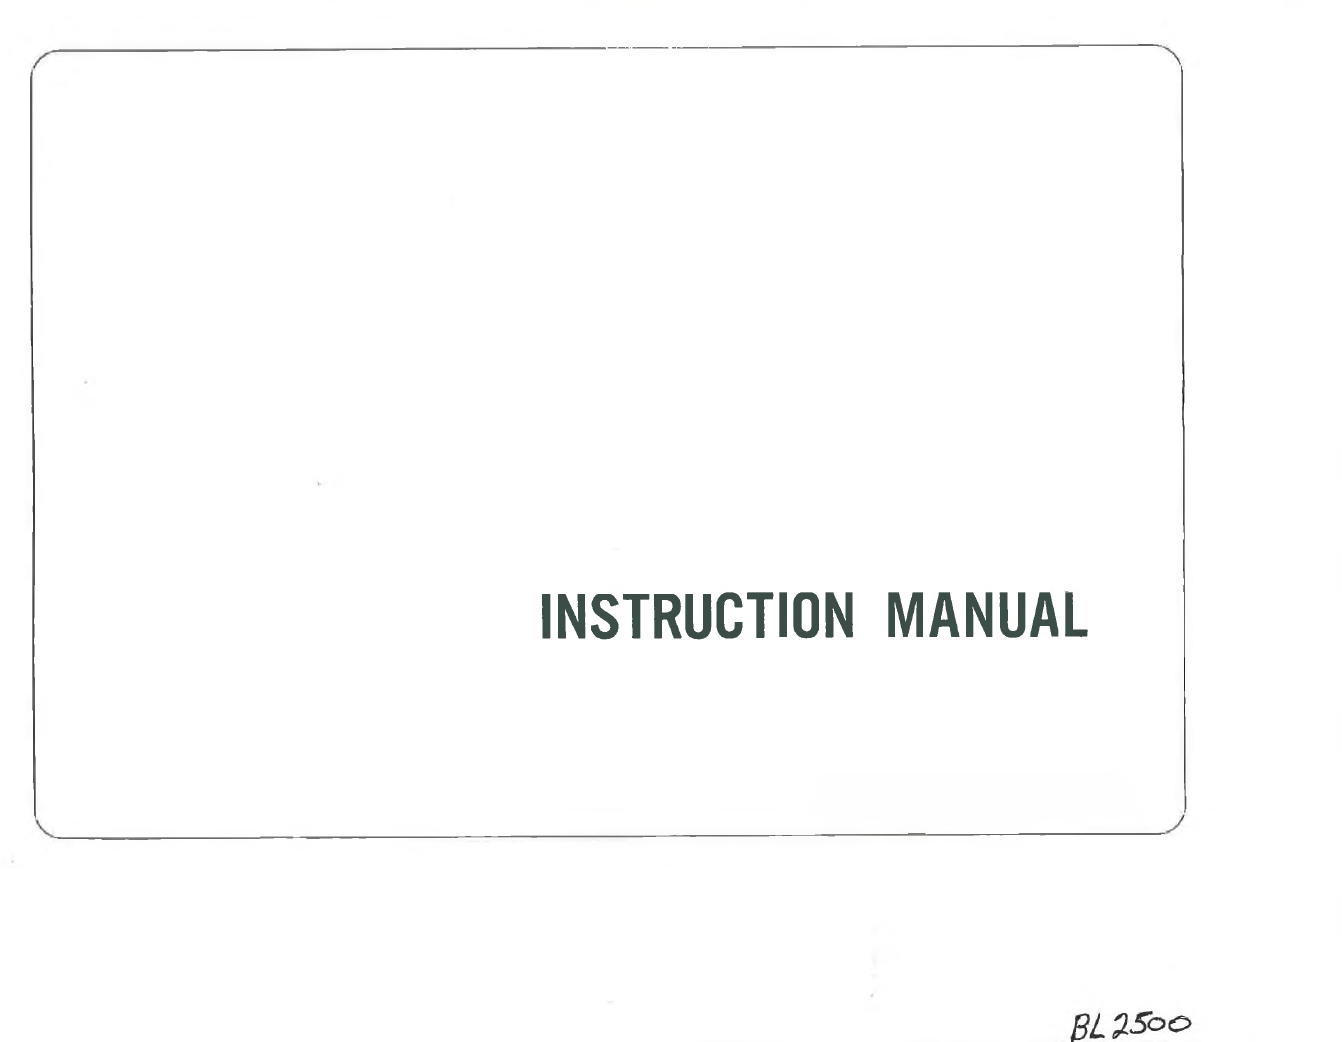 Instruction Manual, Baby Lock BL2500/3500